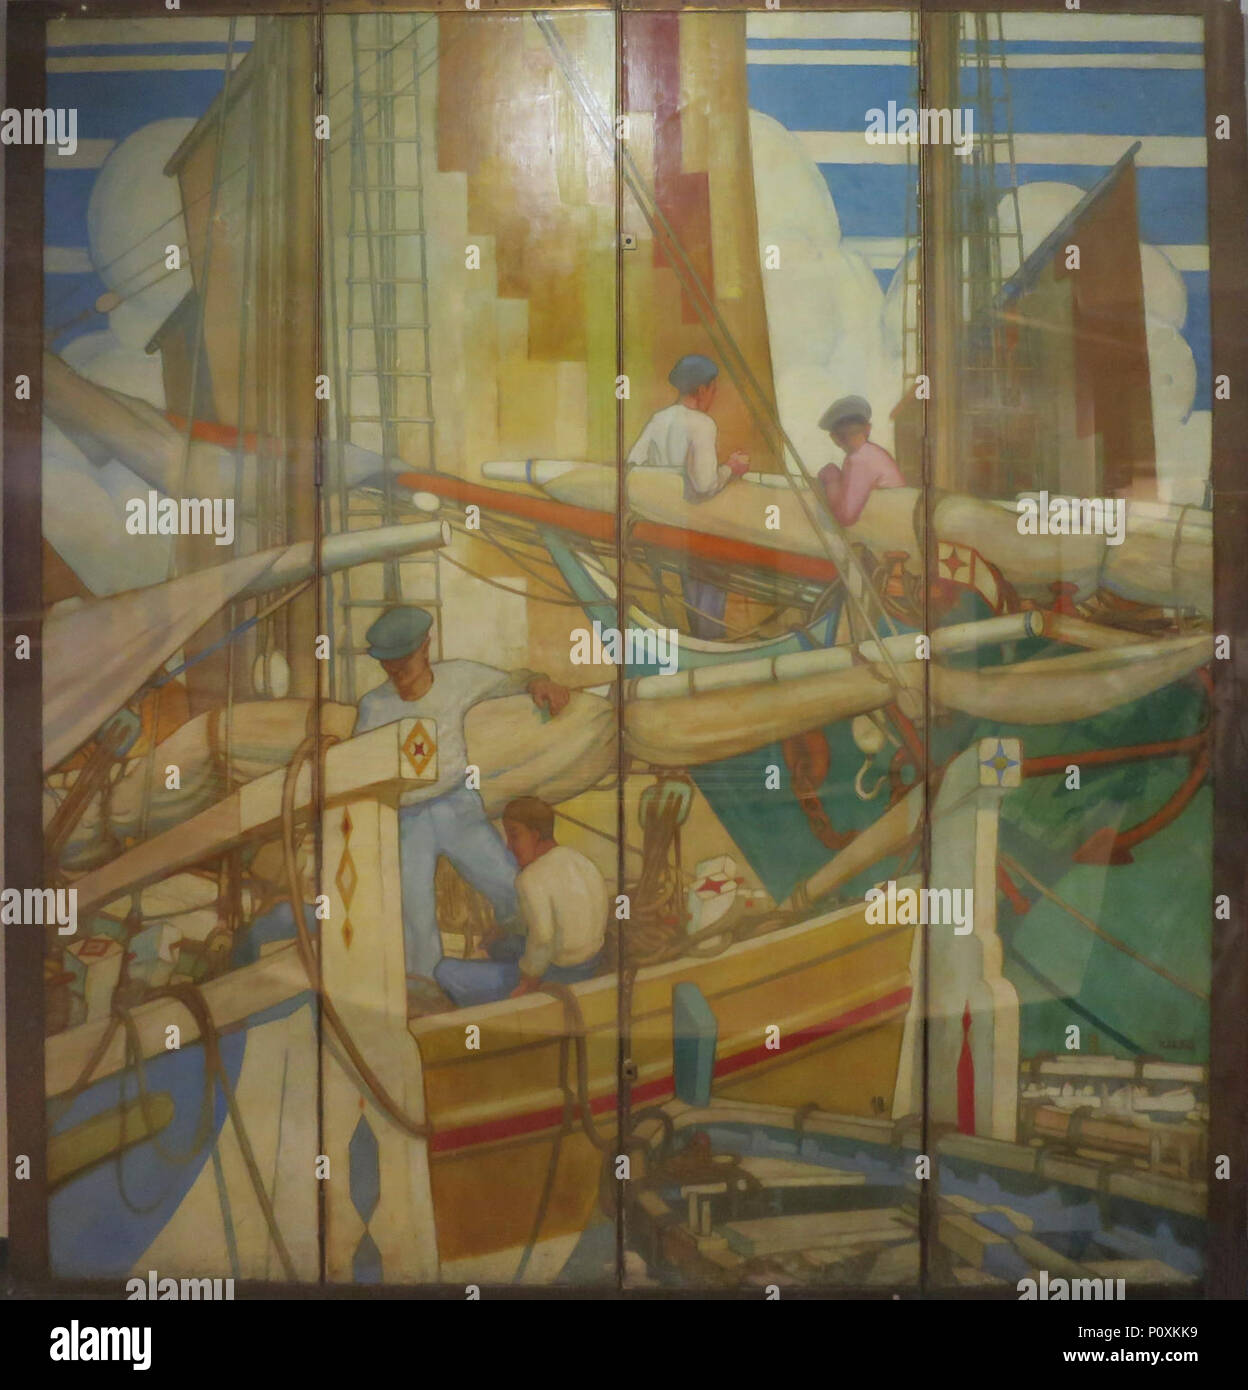 Bin editerranian Hafen Szene', Folding Screen von Kenneth Shoesmith, Queen Mary, erste Klasse. Stockfoto